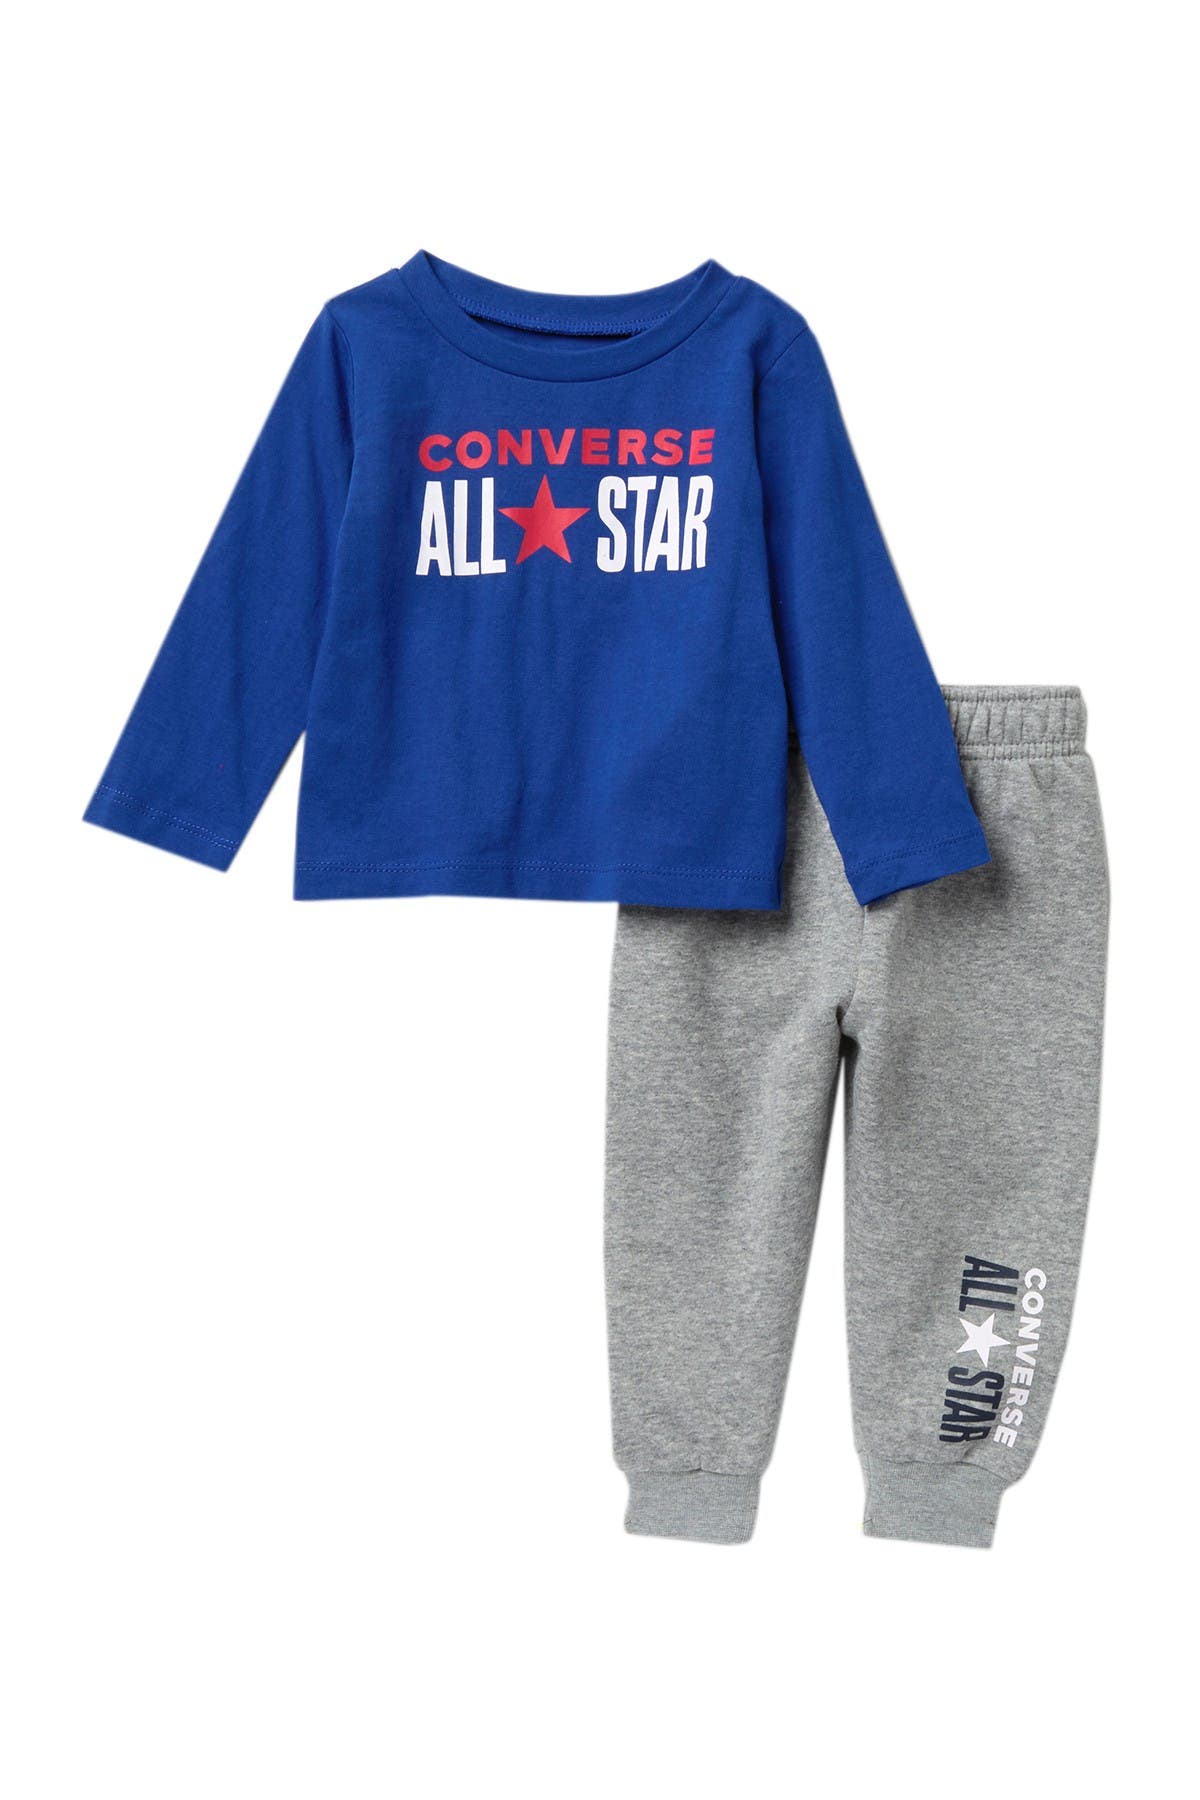 baby converse clothes